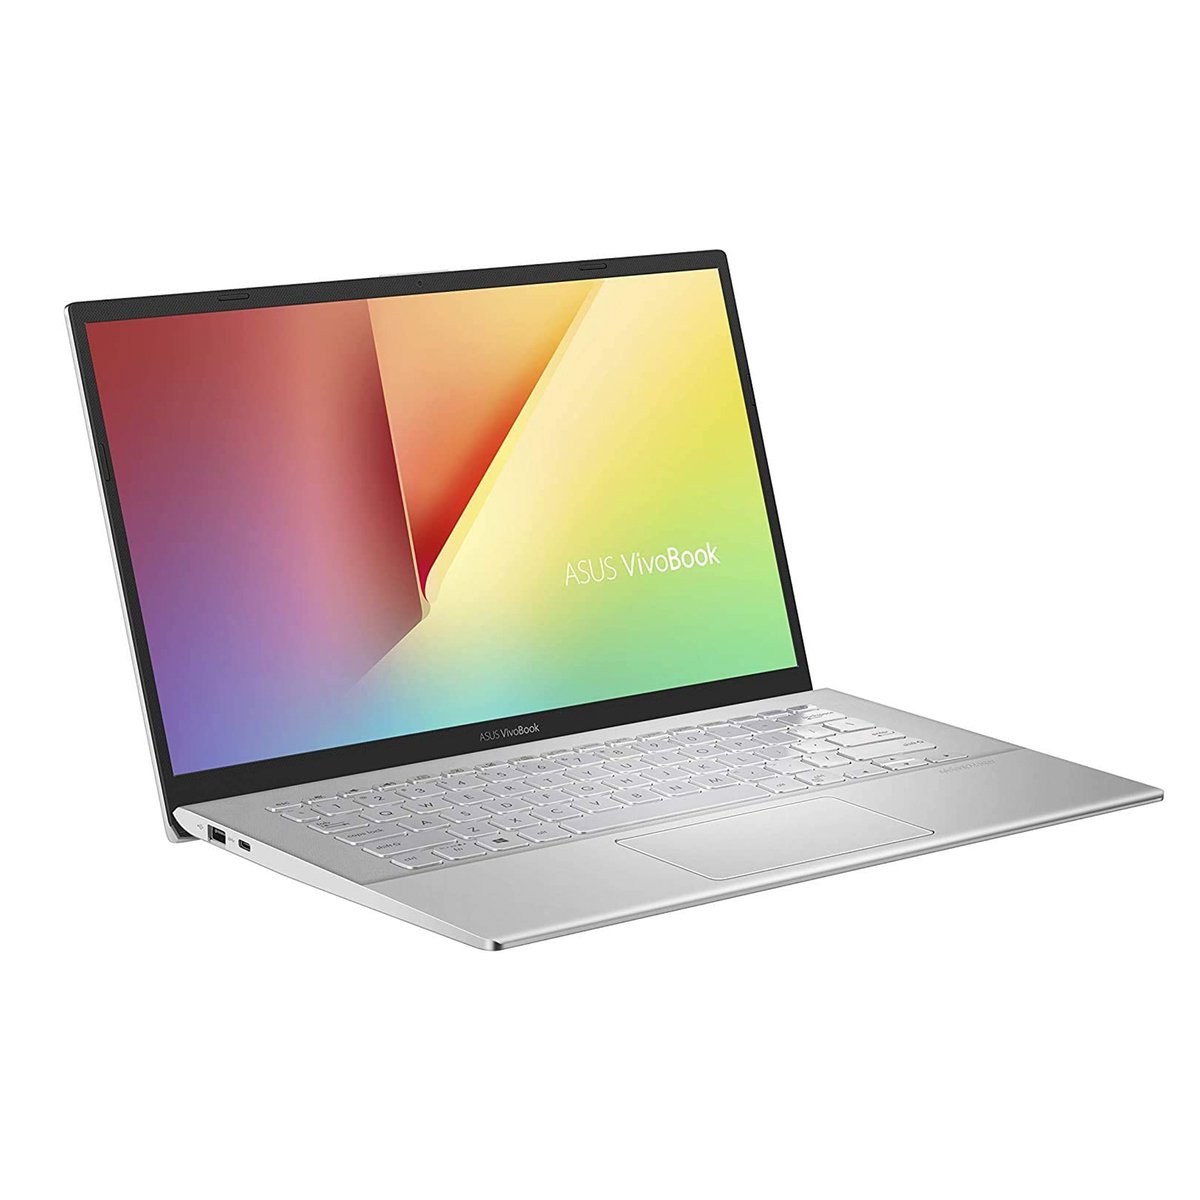 Asus VivoBook 14 A420FA-EB200T Laptop,Intel Core i5-8265U 3.9 GHz, 8 GB RAM, 512 GB SSD, Integrated UHD Graphics 620,14 inches, Windows 10,Transparent Silver